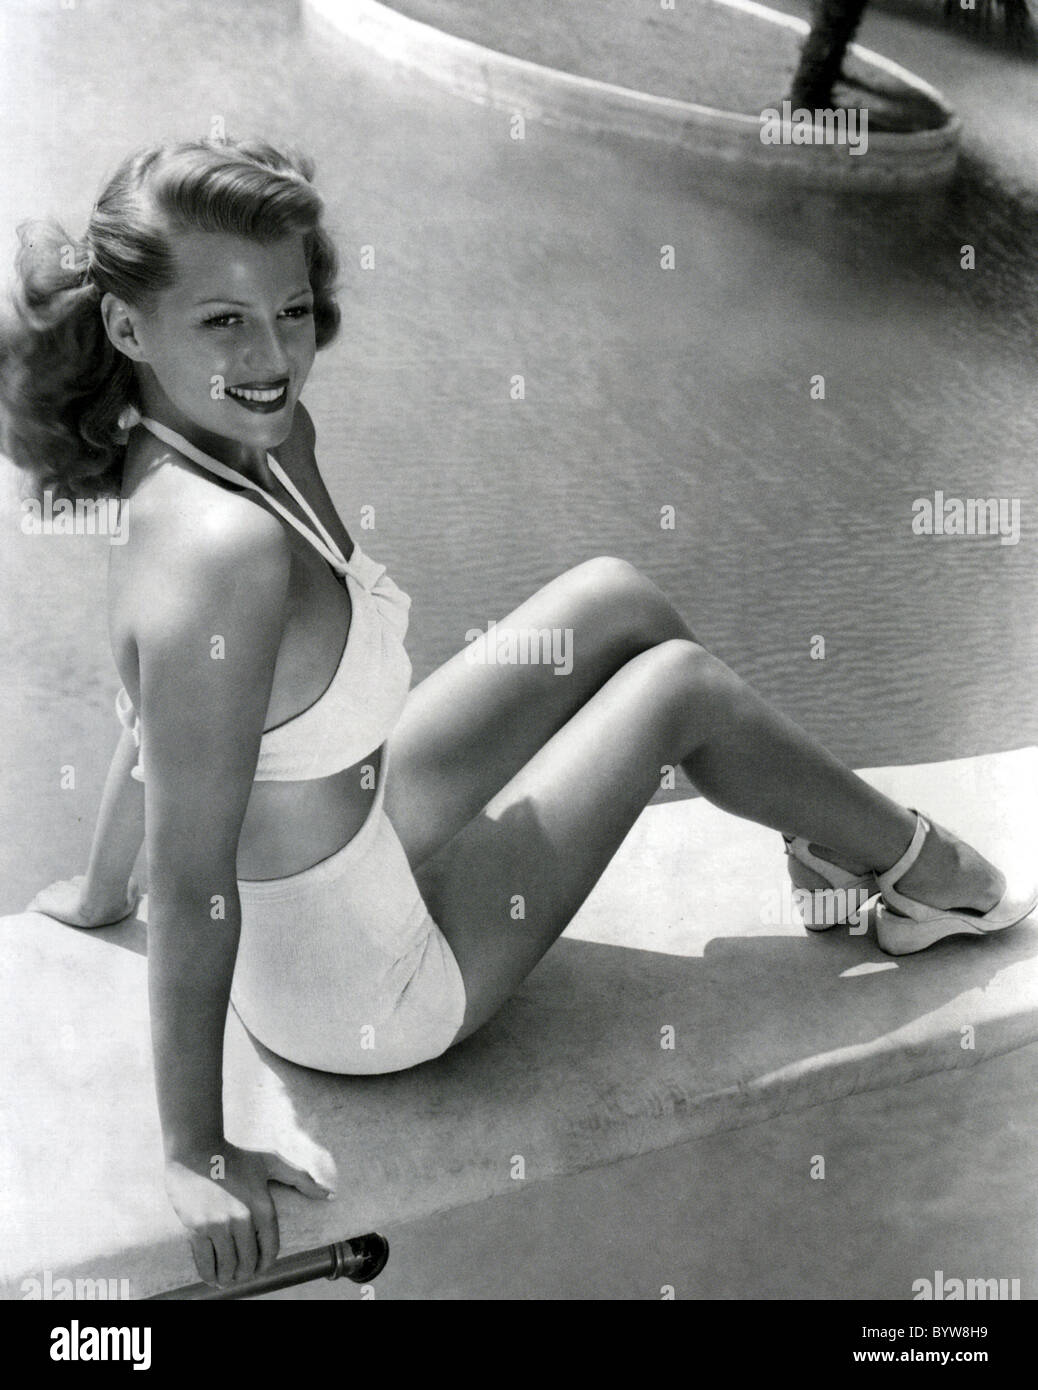 Rita hayworth bikini hi-res stock photography and images - Alamy